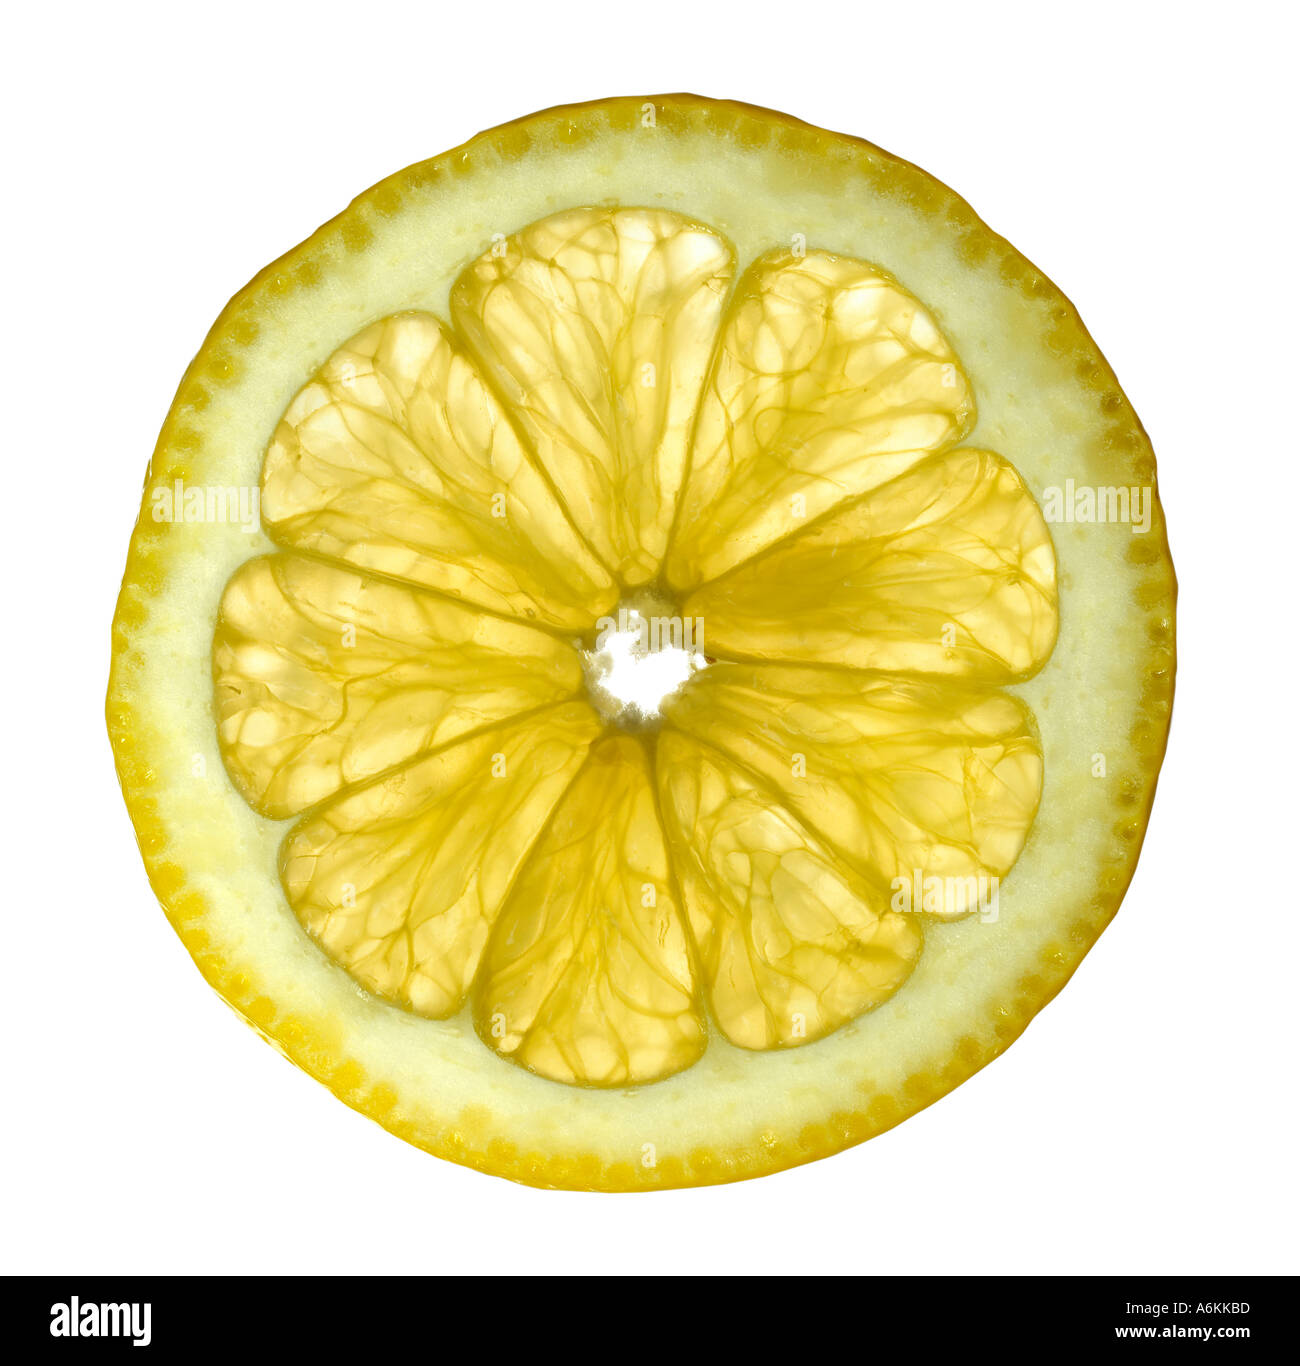 Single slice of lemon (close-up) Stock Photo